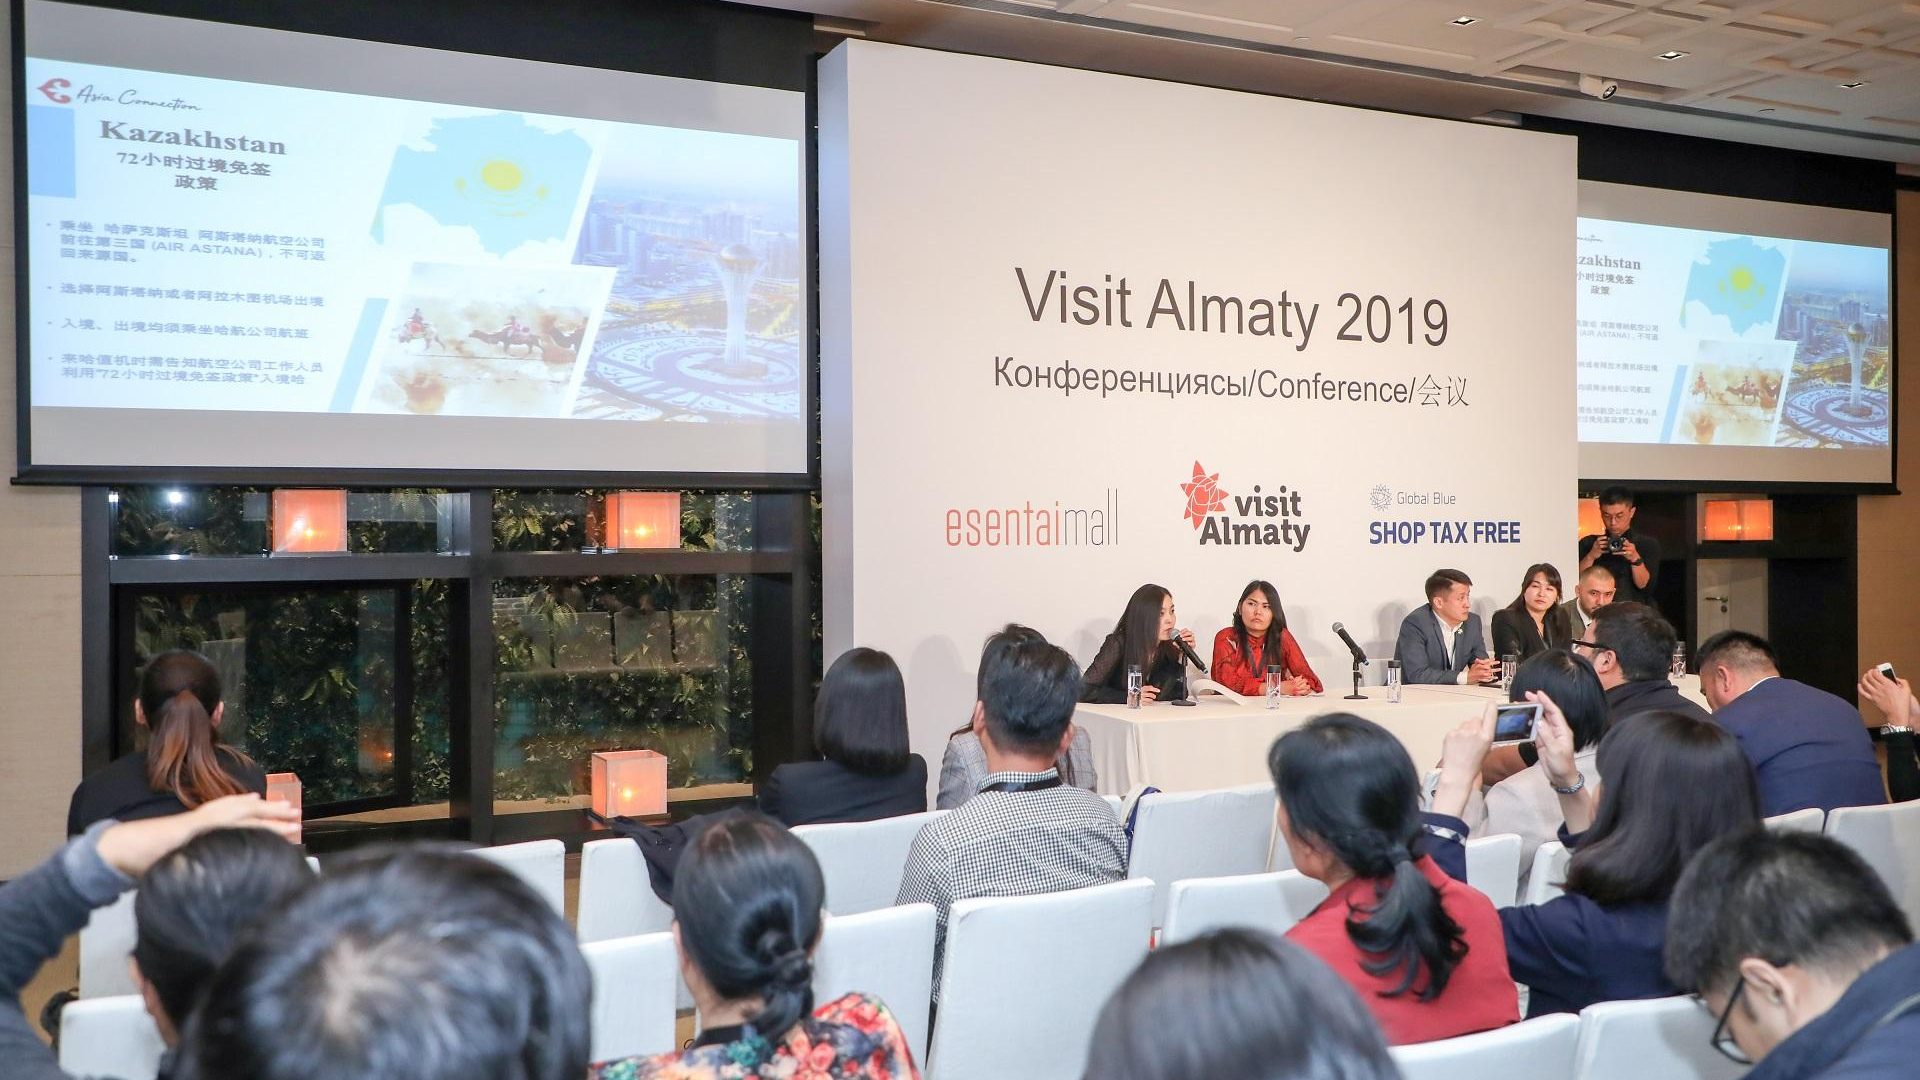 Press conference “Visit Almaty 2019” in Beijing